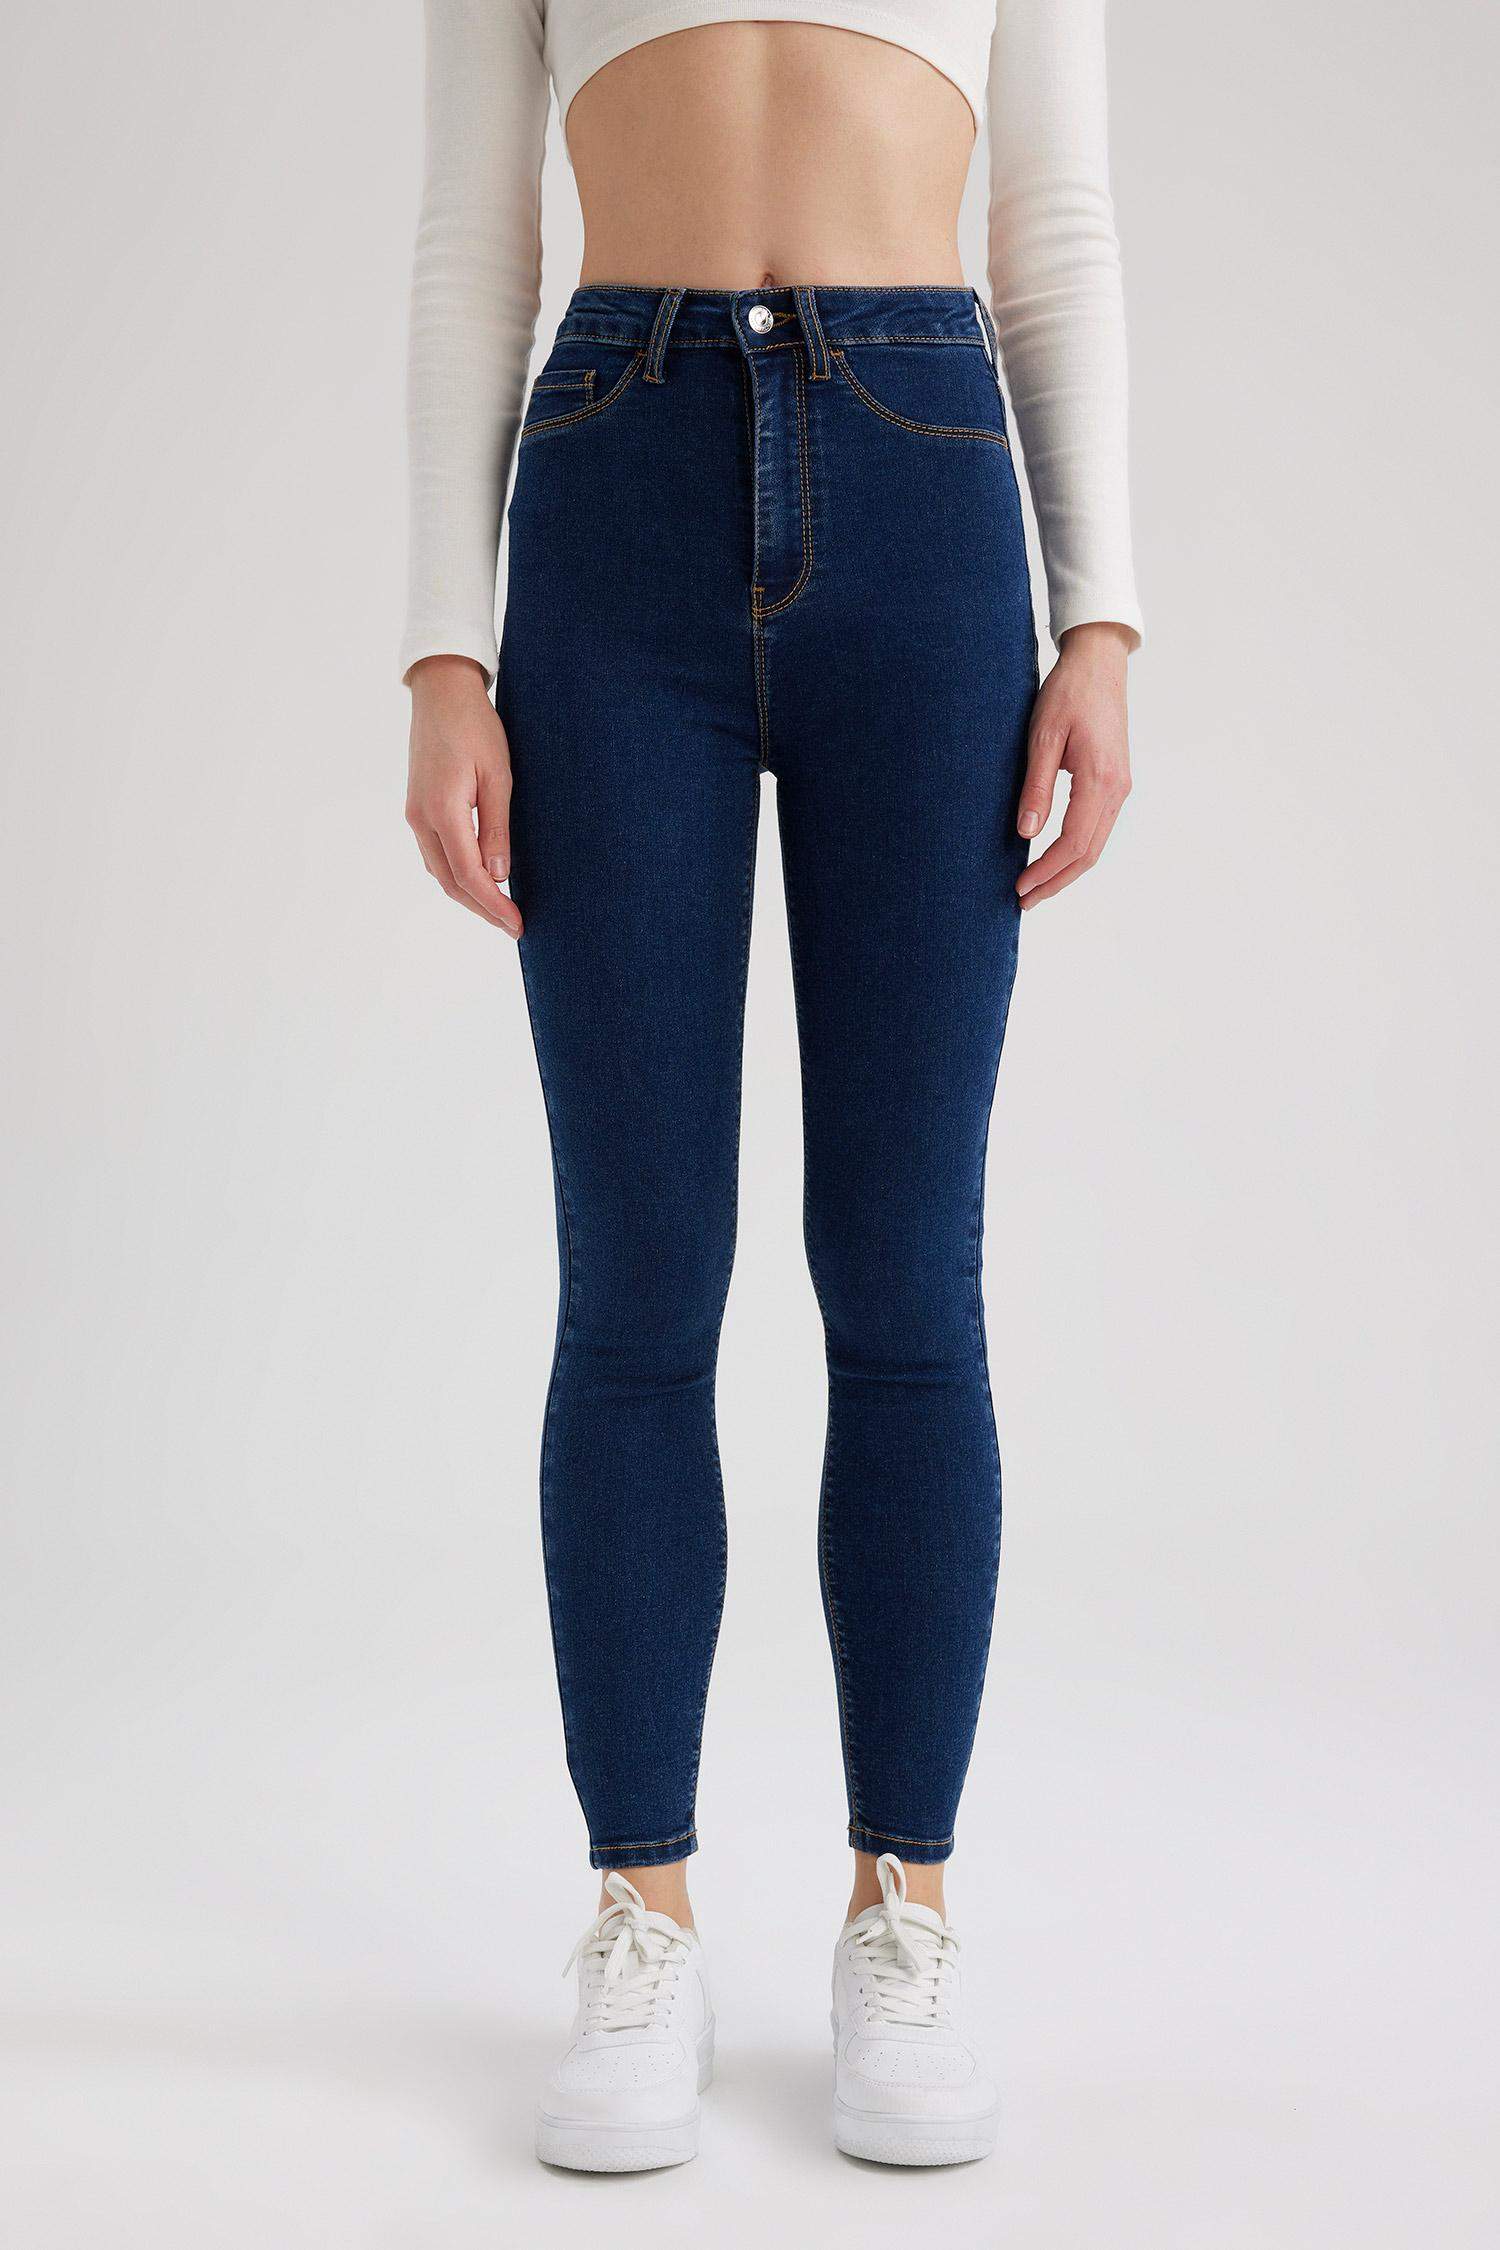 Bra(Size D85), Women's Fashion, Bottoms, Jeans & Leggings on Carousell